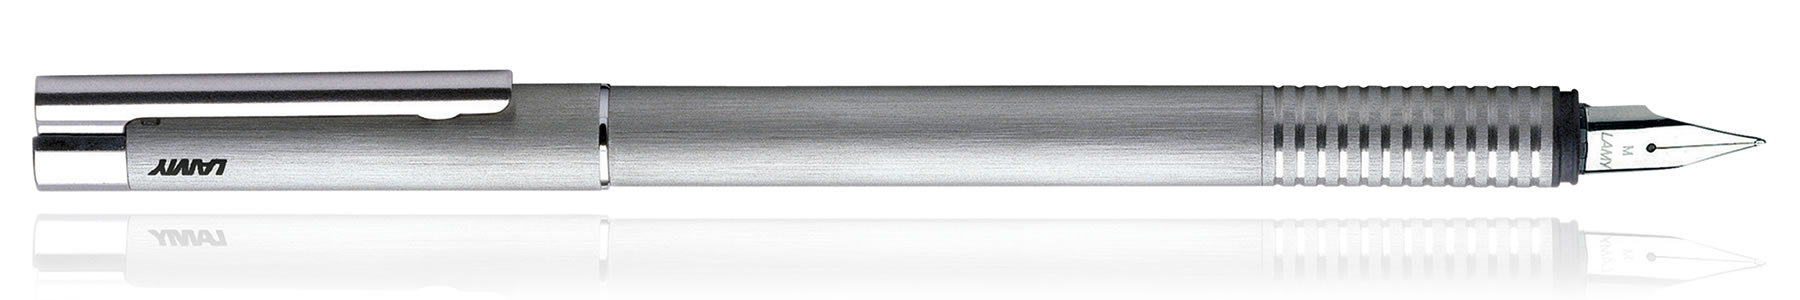 Lamy Sfera Logo Brushed 206 Acciaio Brushed Stainless Steel Ballpoint Pen 